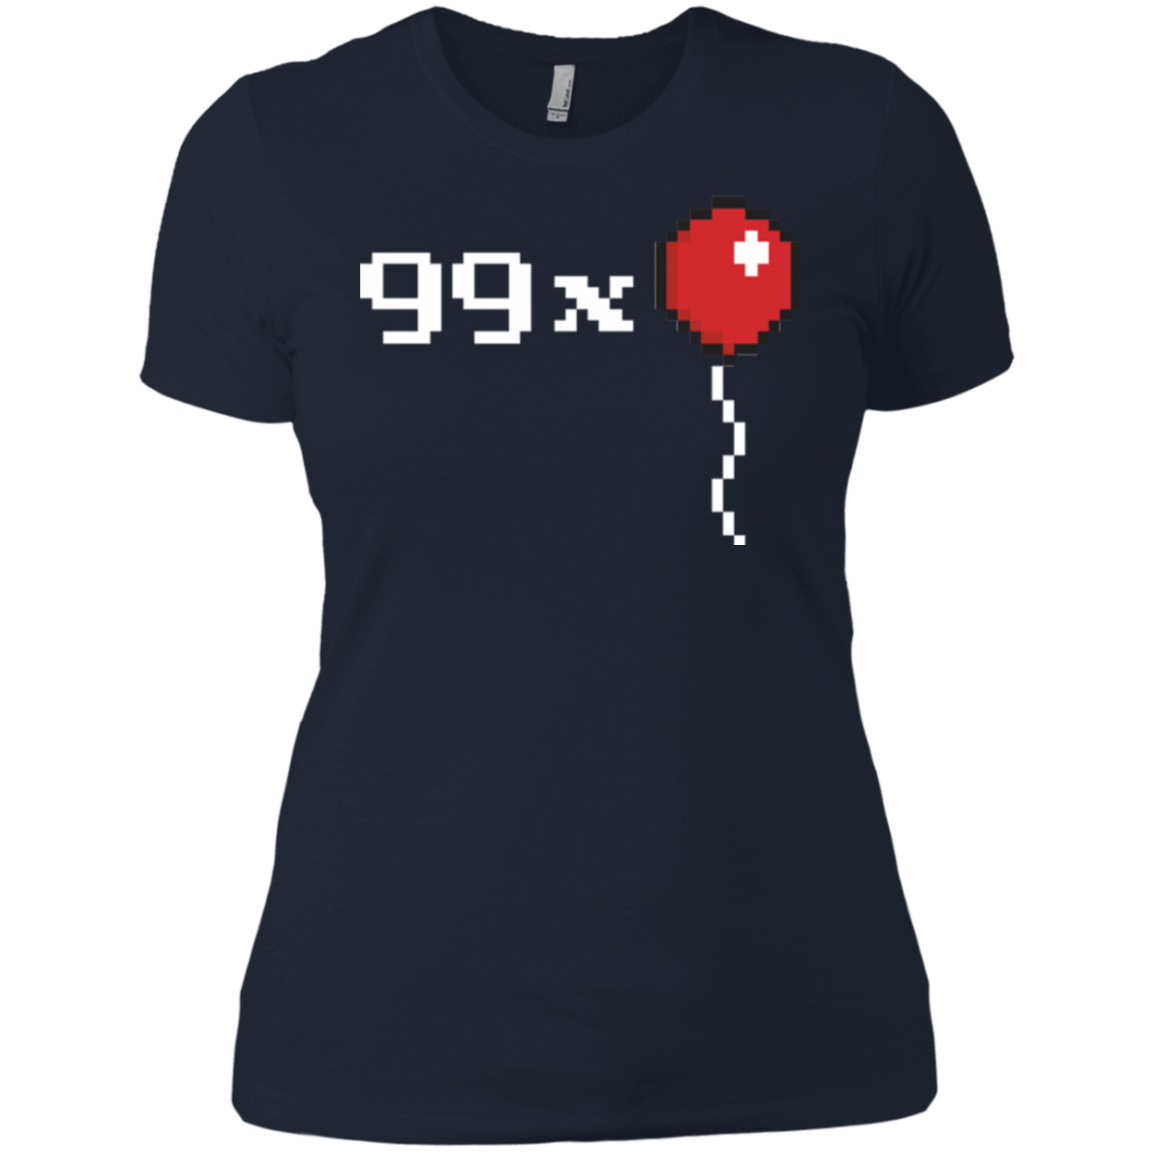 T-Shirts Midnight Navy / X-Small 99x Balloon Women's Premium T-Shirt